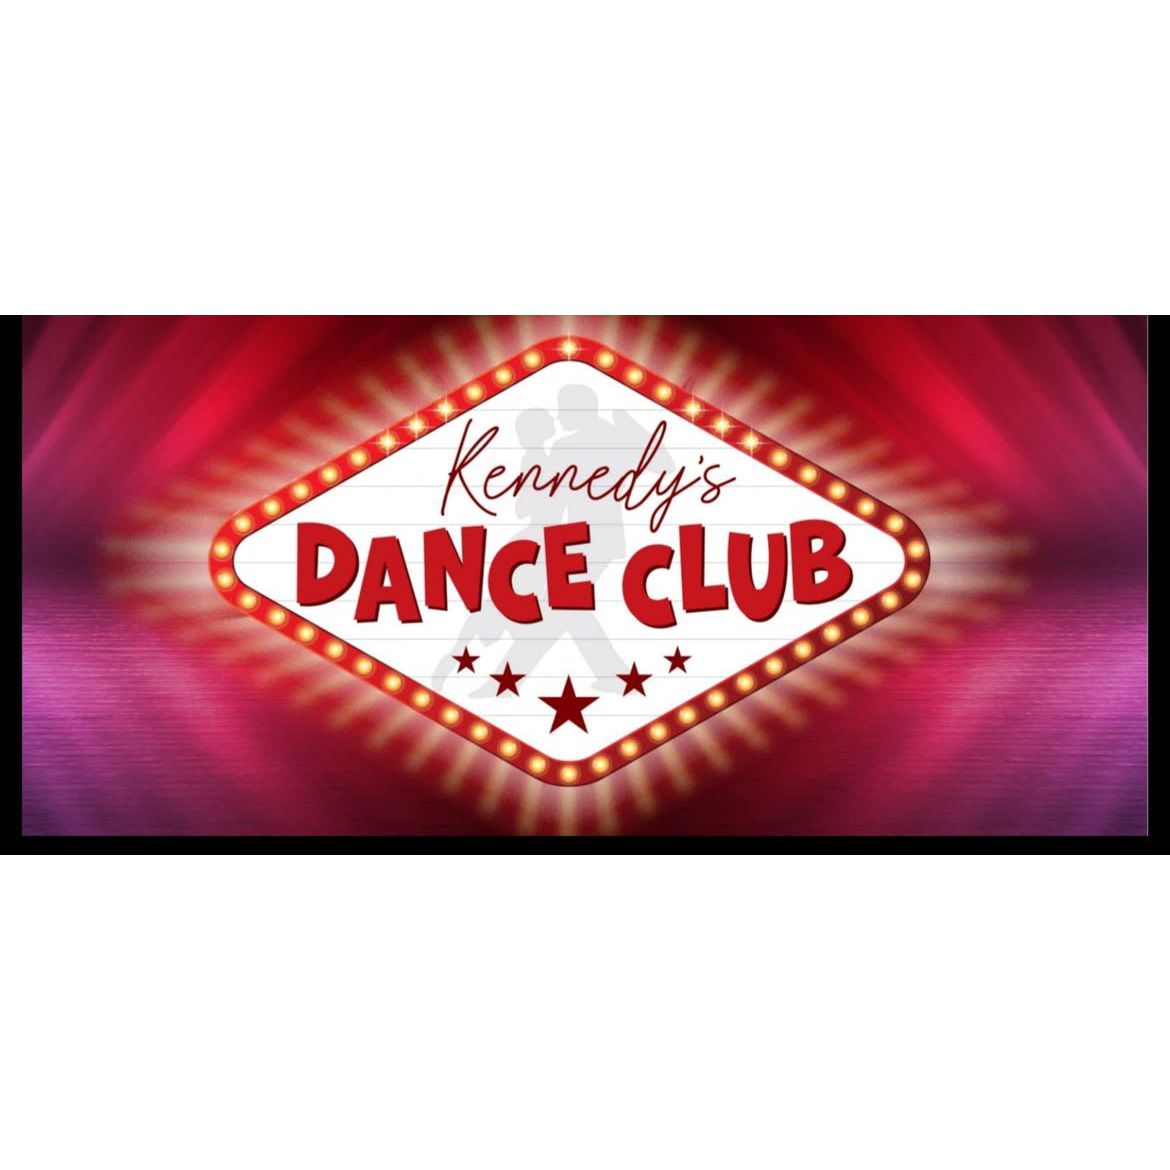 Kennedys Dance Club - Milton Keynes, Buckinghamshire MK13 0AA - 07968 302398 | ShowMeLocal.com